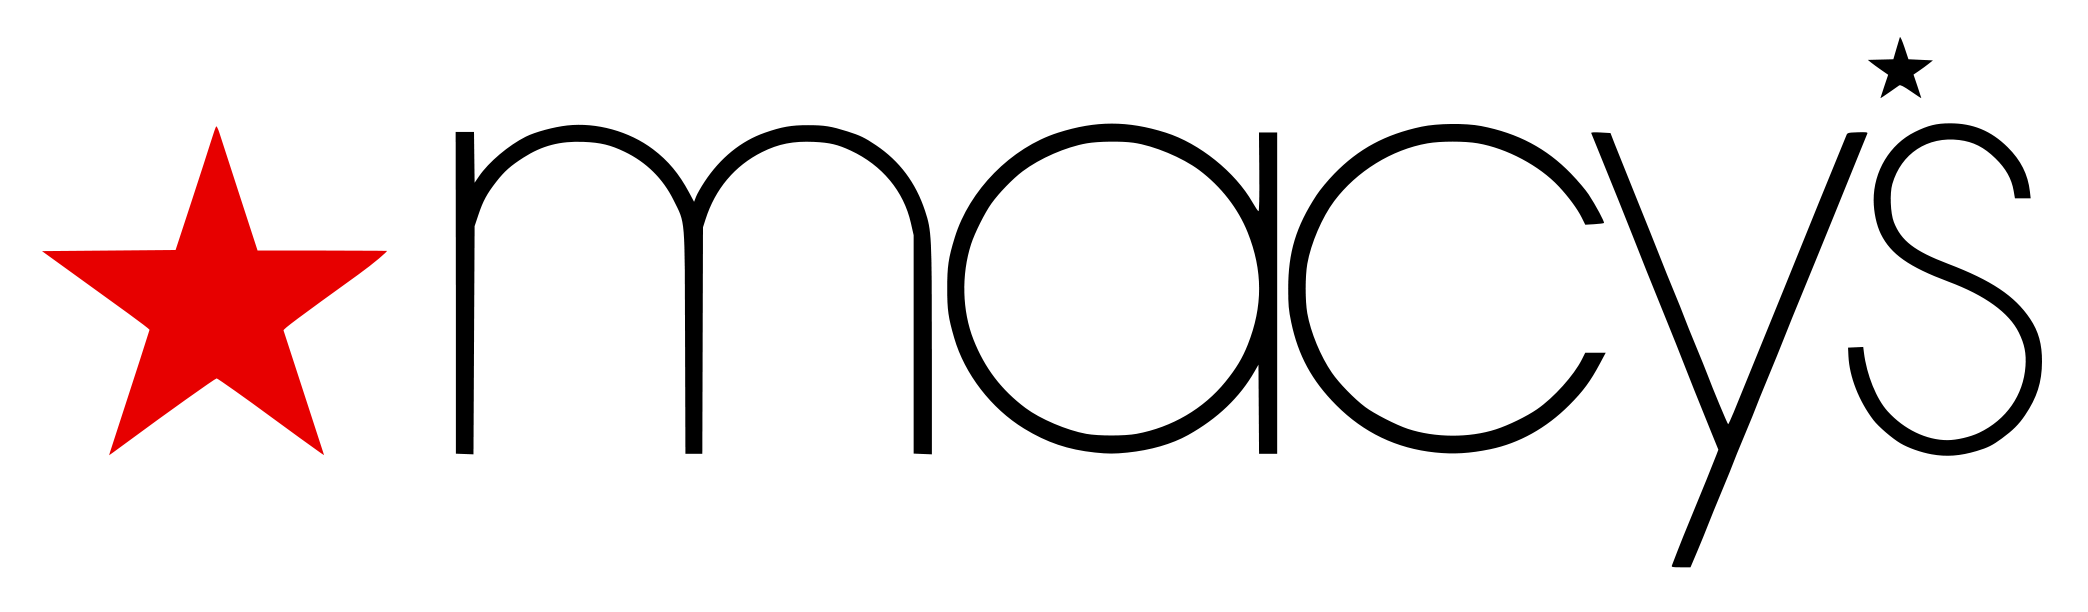 Macys Logo